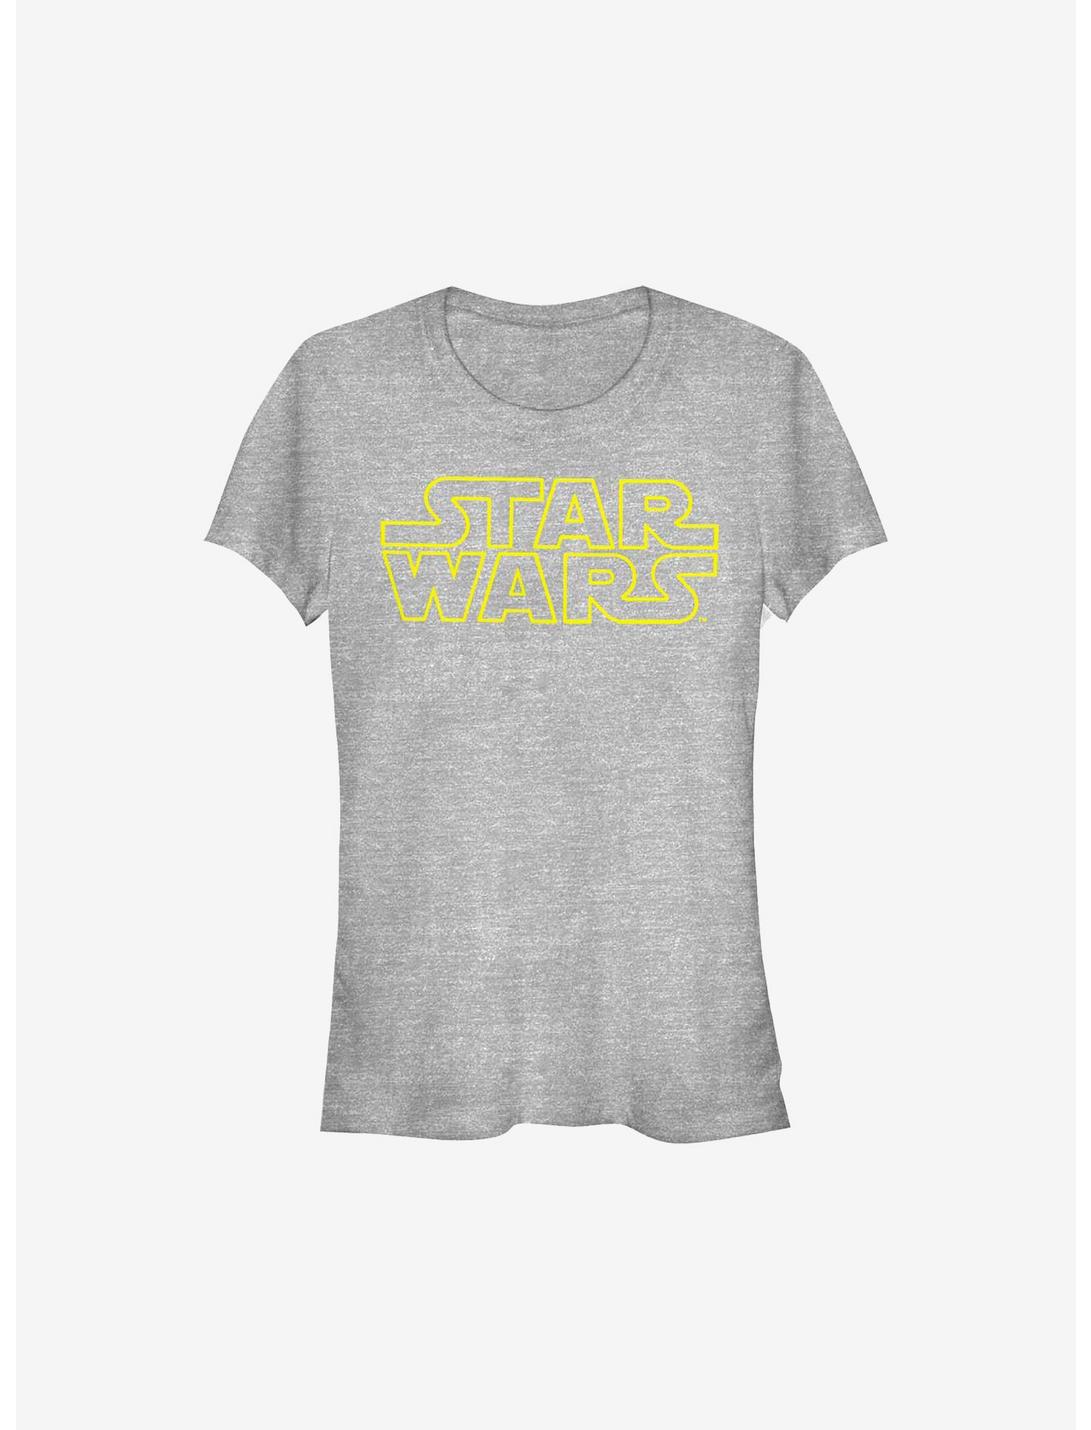 Star Wars Simplified Star Wars Girls T-Shirt, ATH HTR, hi-res